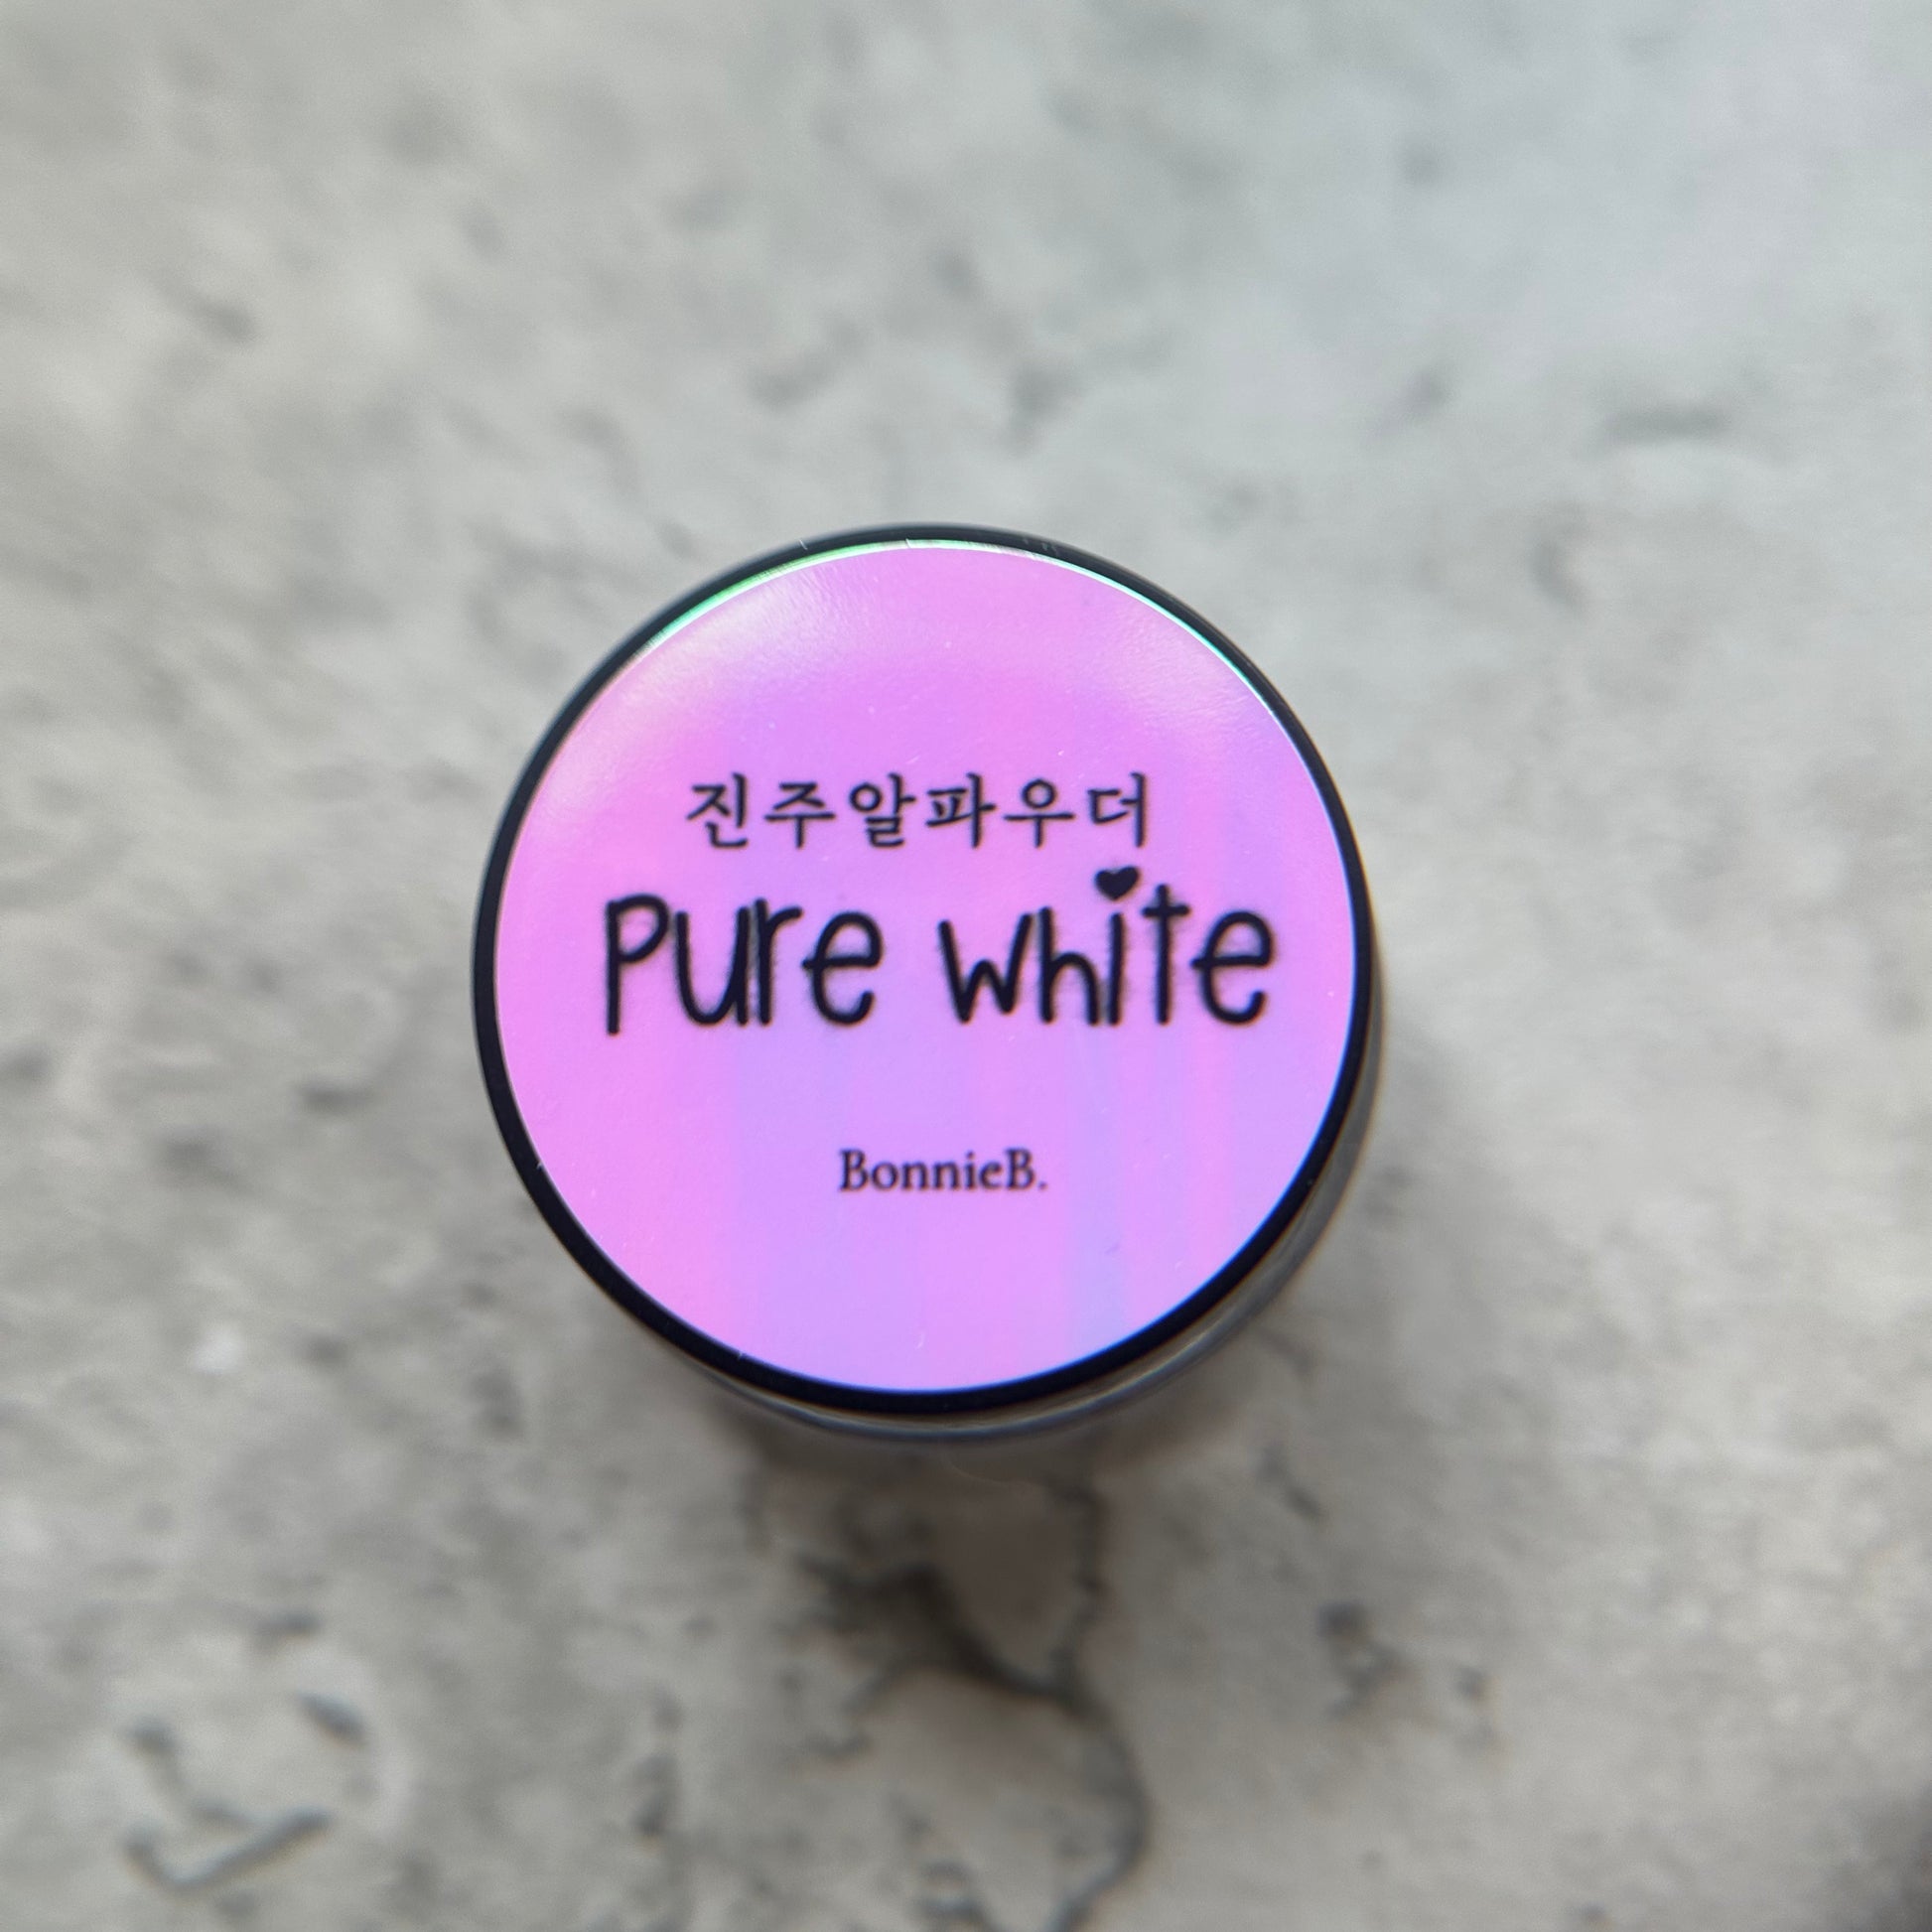 12 Pure White Liquid Chrome by JKIOcean – Nail Company Wholesale